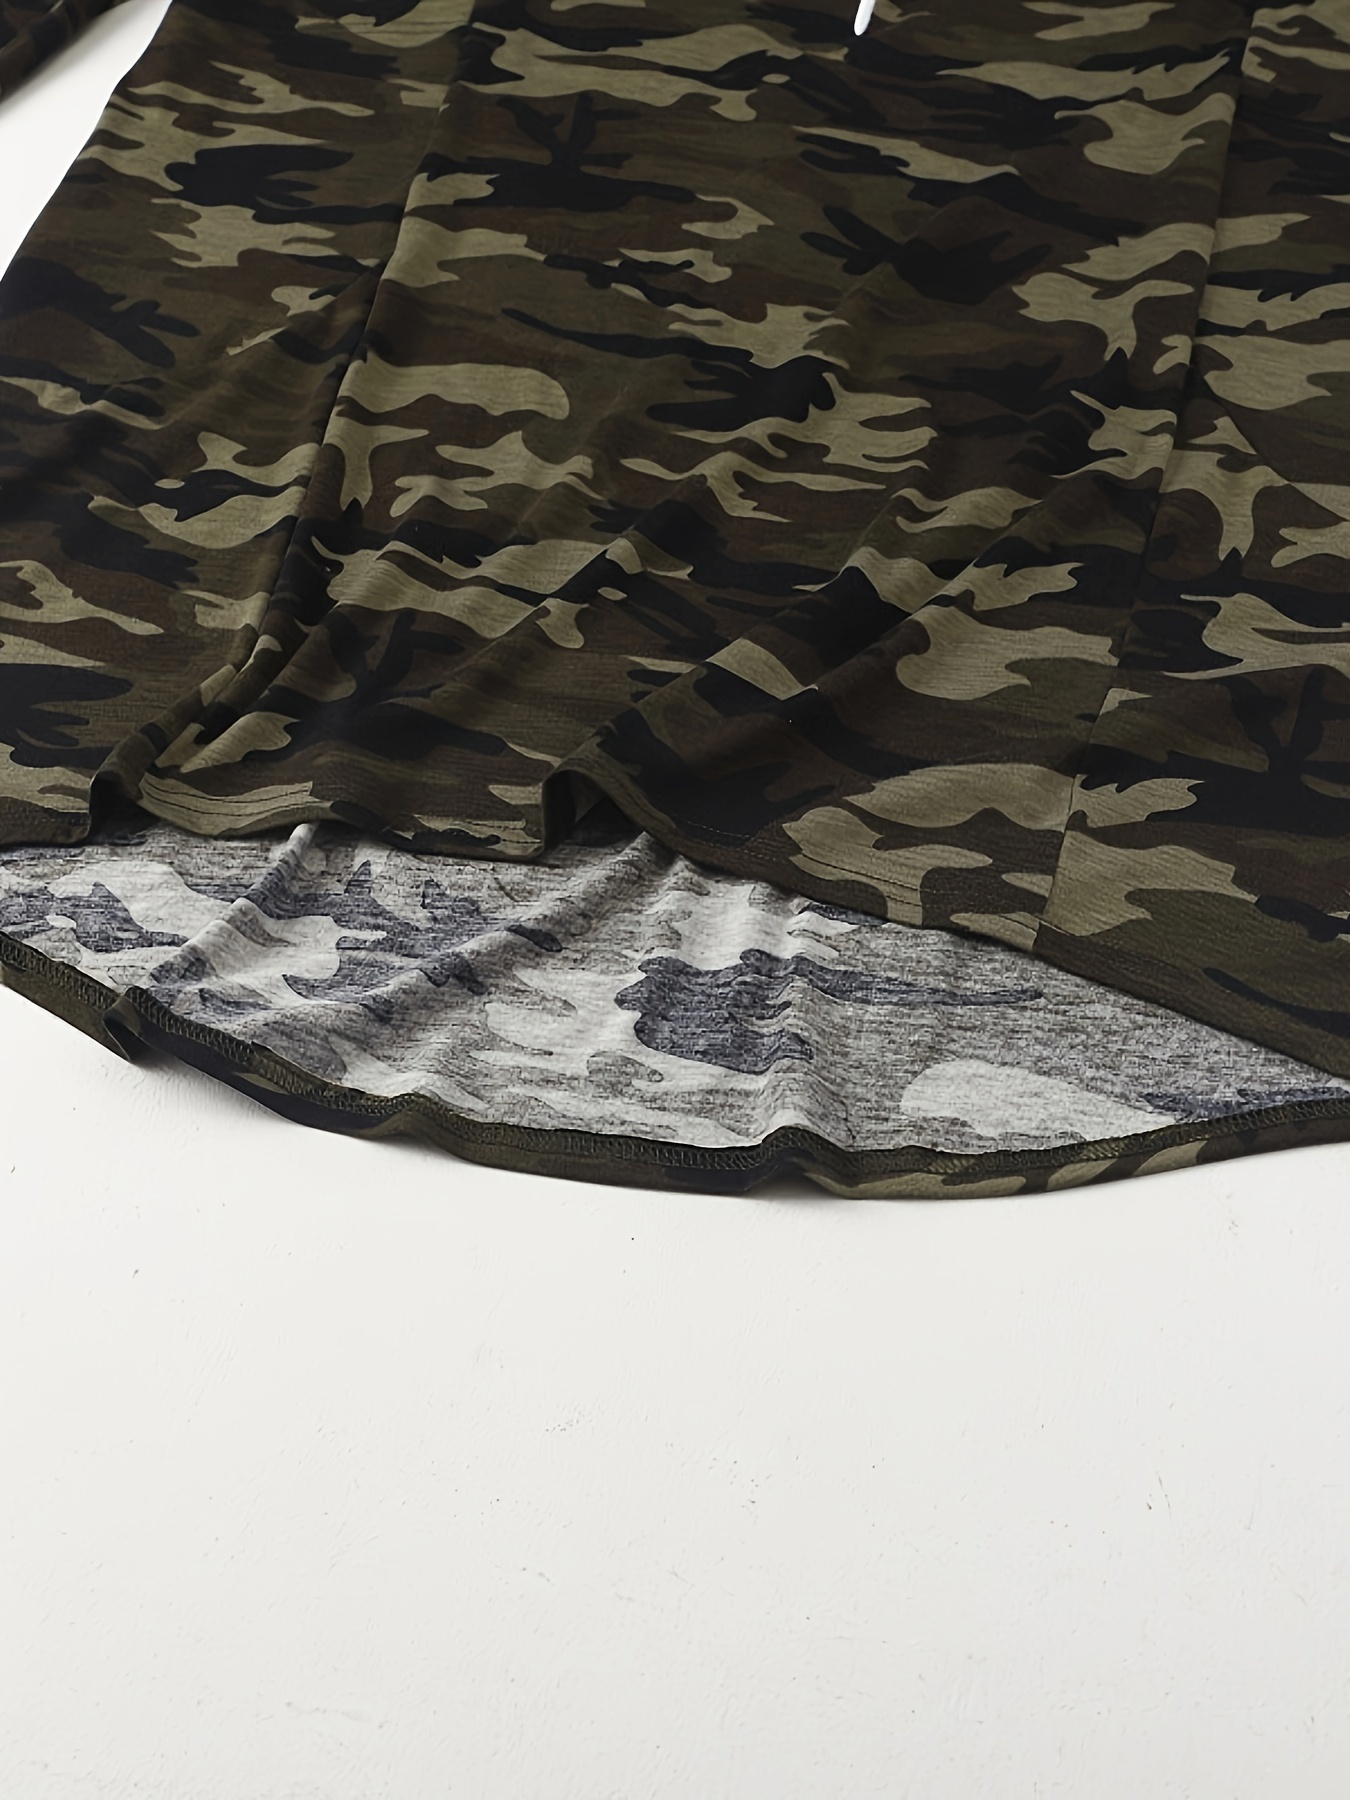 Bershka Camouflage Military Coats & Jackets for Women